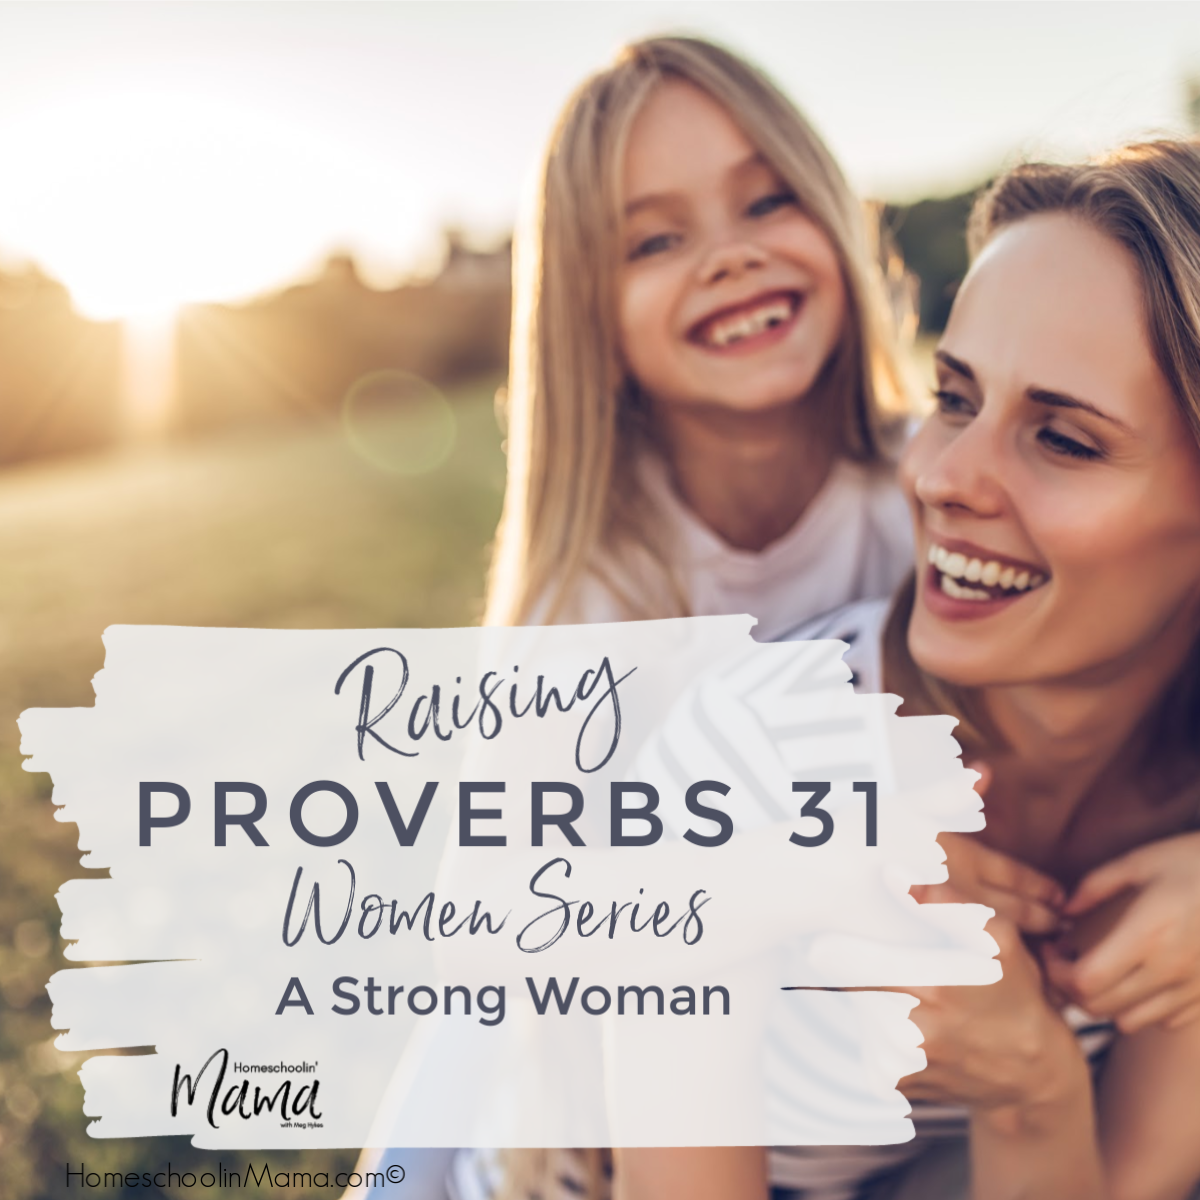 Raising Proverbs 31 Women Series - A Strong Woman